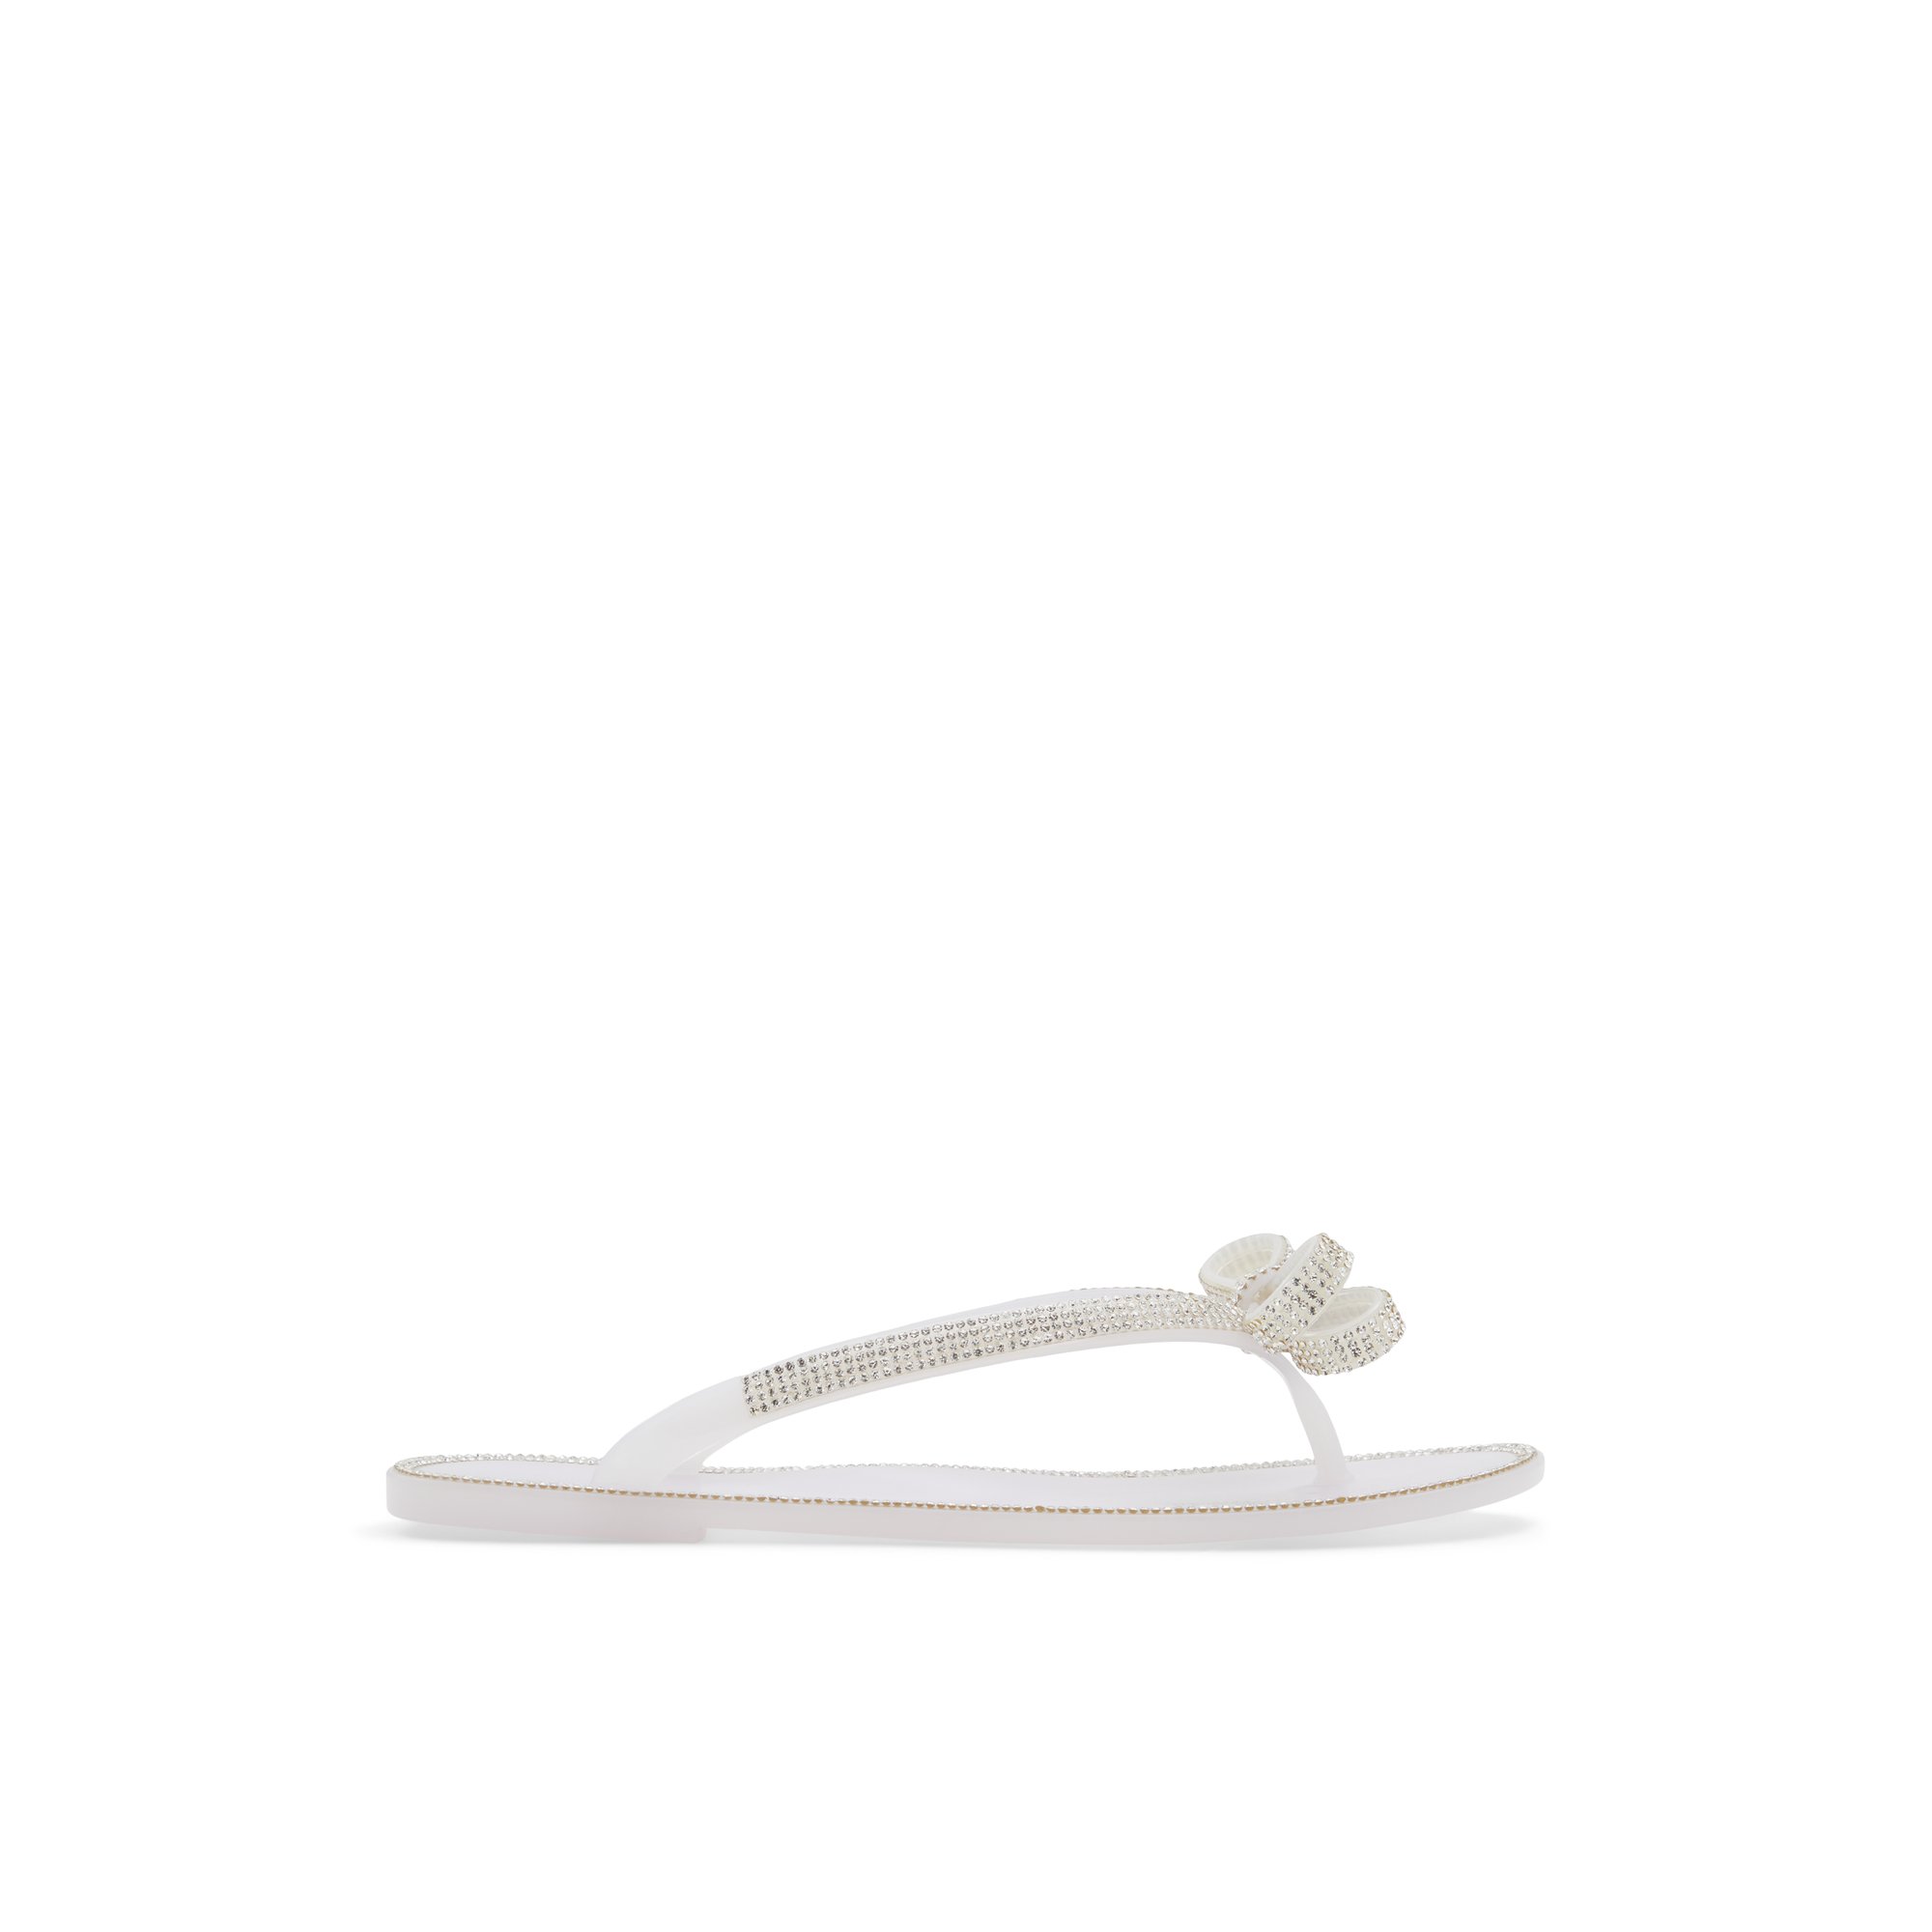 ALDO Kediracien - Women's Sandal - White